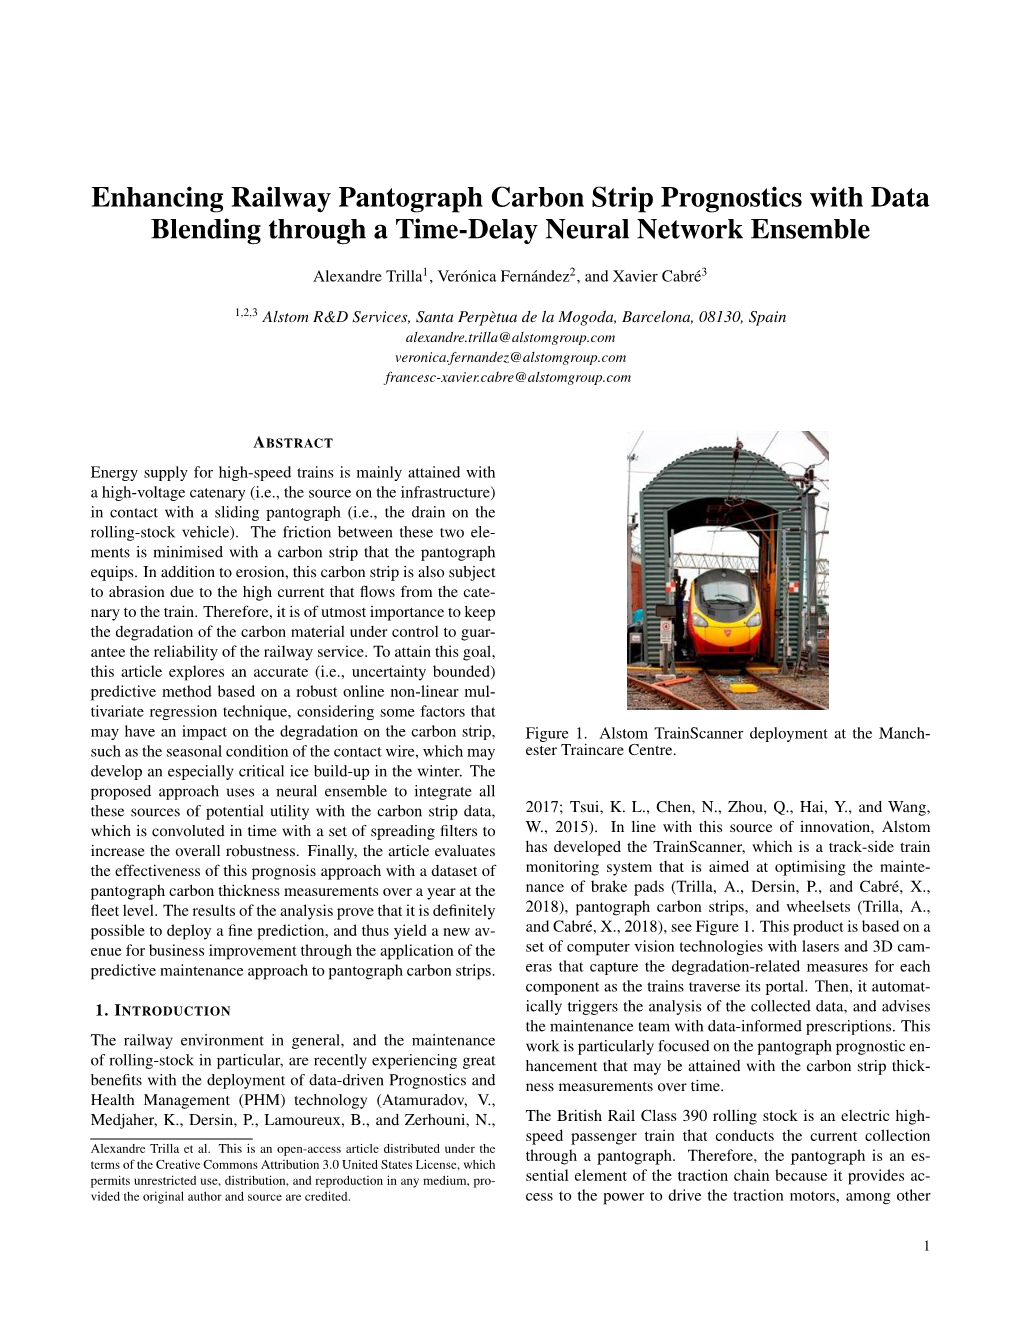 Enhancing Railway Pantograph Carbon Strip Prognostics with Data Blending Through a Time-Delay Neural Network Ensemble